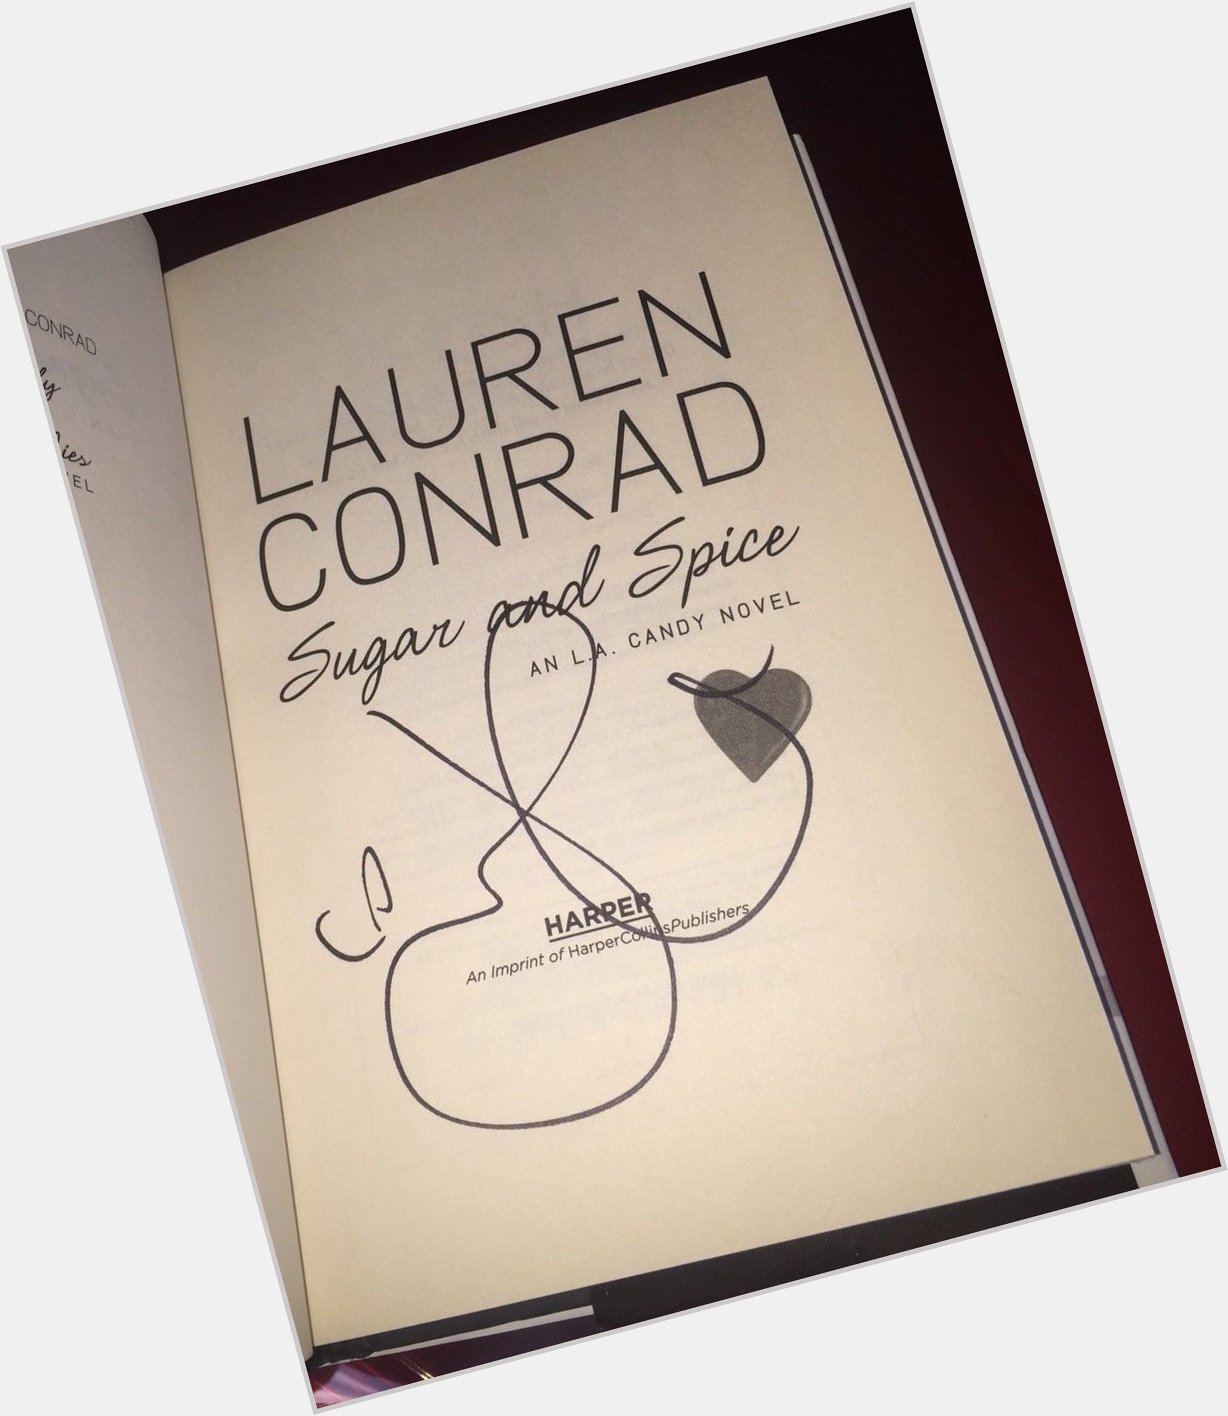 Happy Birthday, Lauren Conrad!   